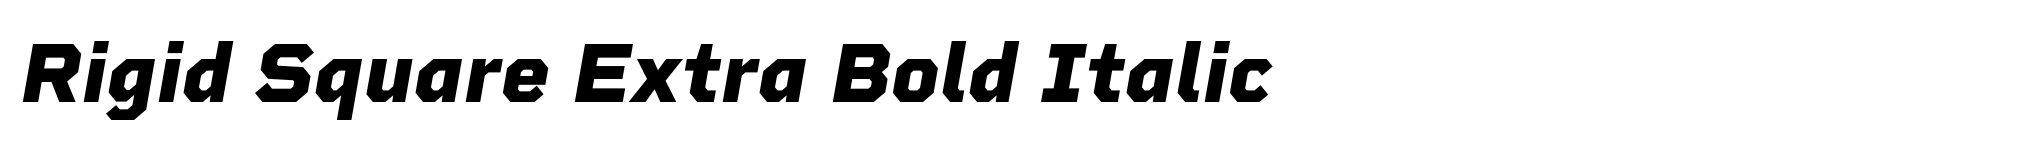 Rigid Square Extra Bold Italic image